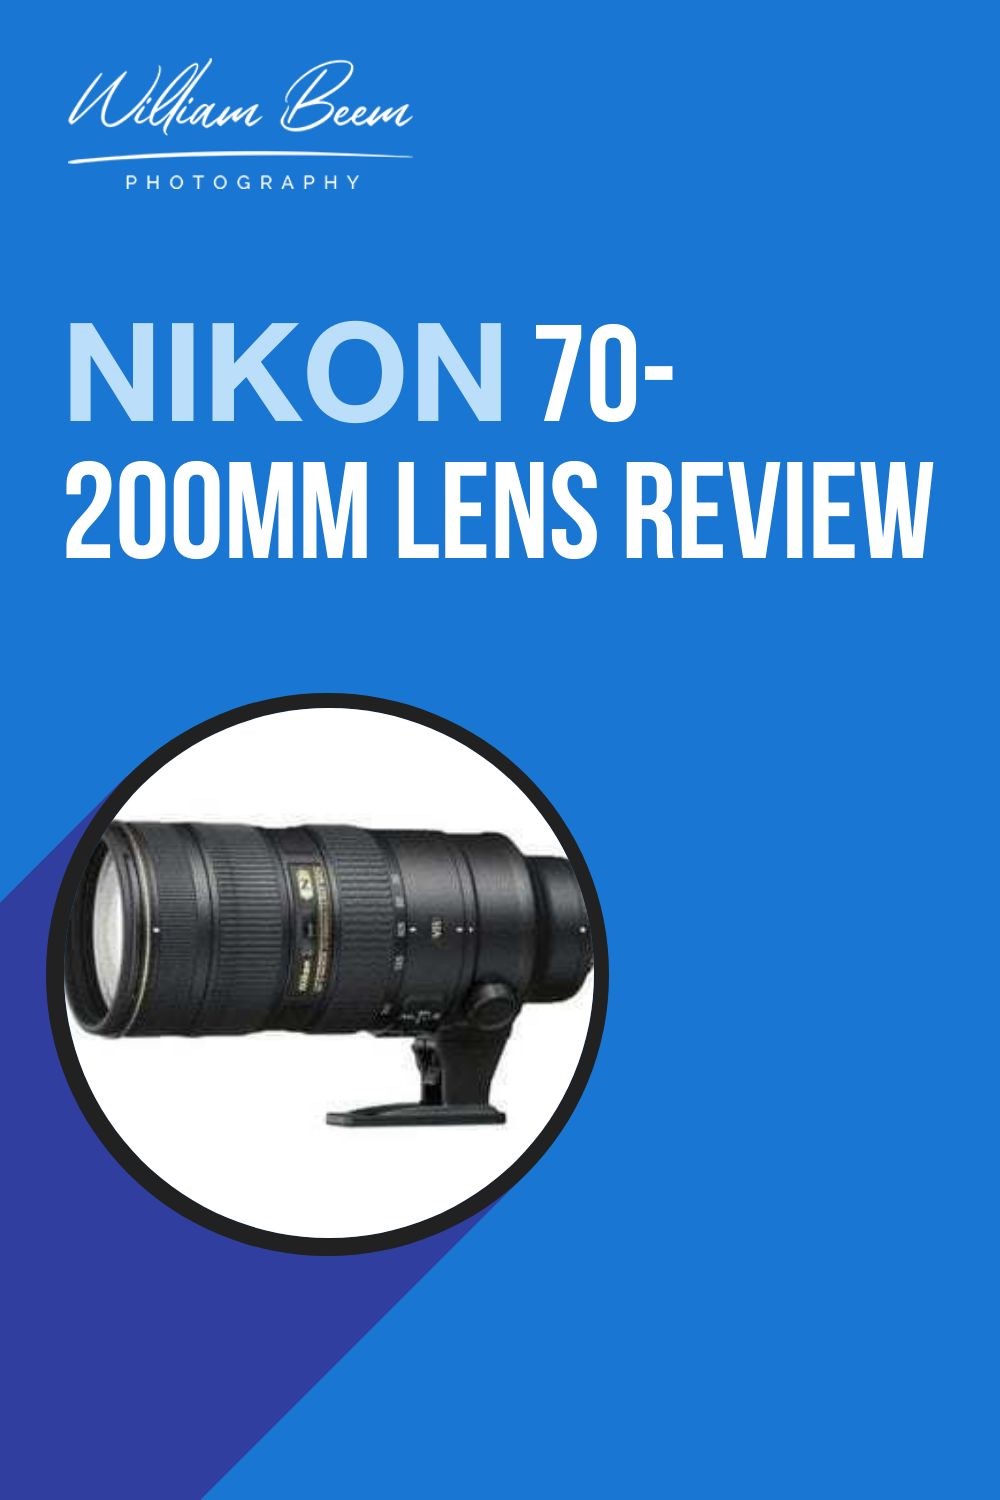 Nikon 70-200mm Lens Review